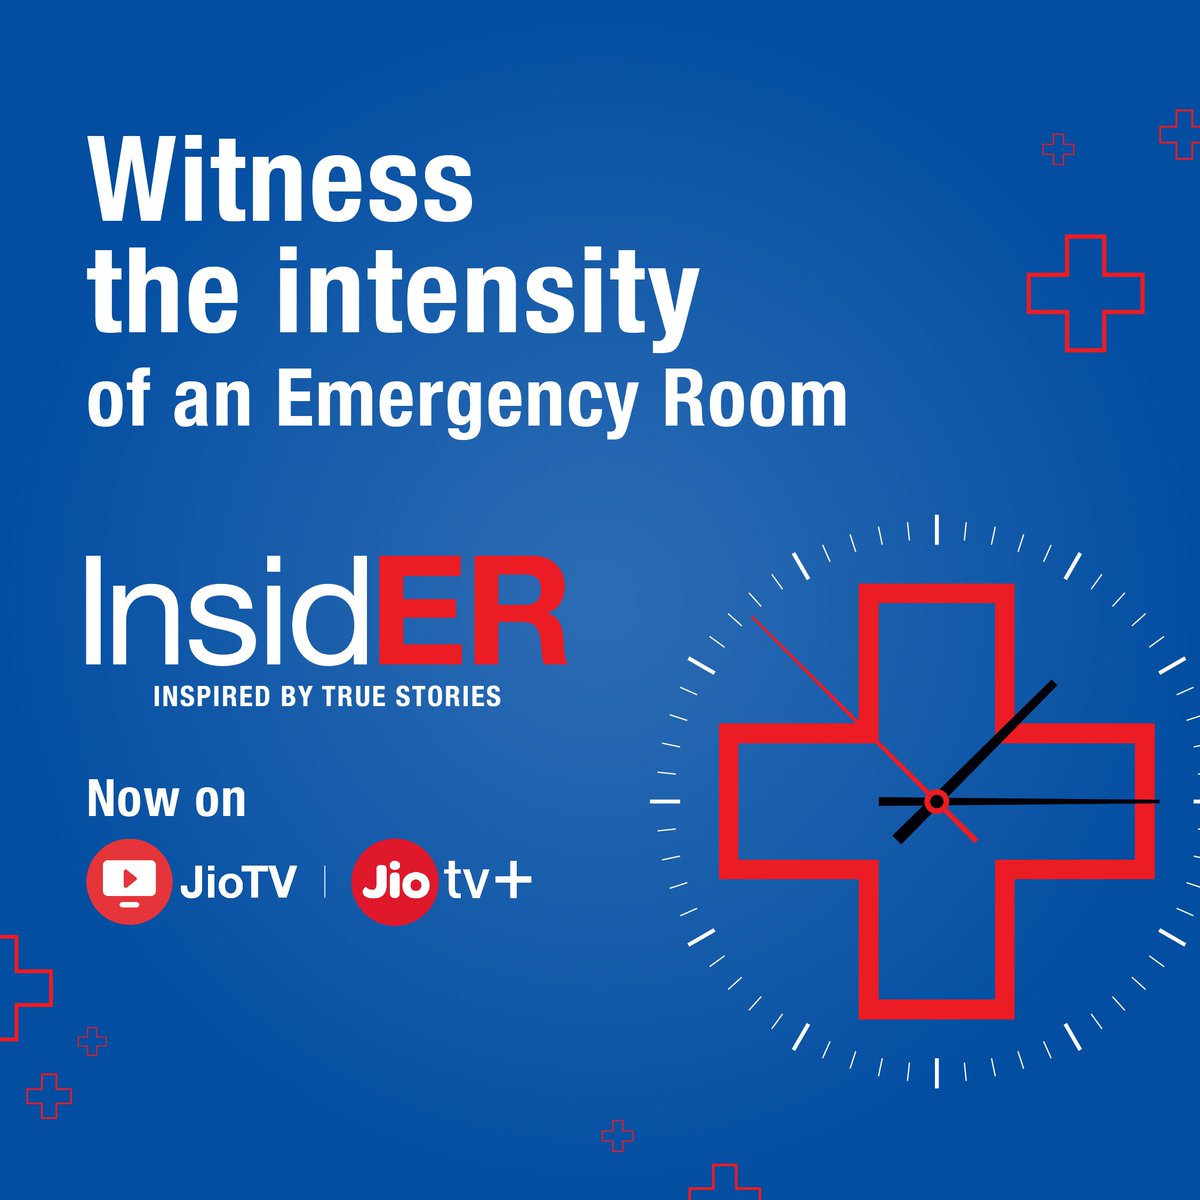 Catch India’s 1st medical docu-drama series #InsidER. Now streaming on JioTV and JioTV+. @NarayanaHealth #InsidER #Emergency #NewRelease #WatchOnJioTV #WatchOnJioTVPlus #TakeCare #NarayanaHealth